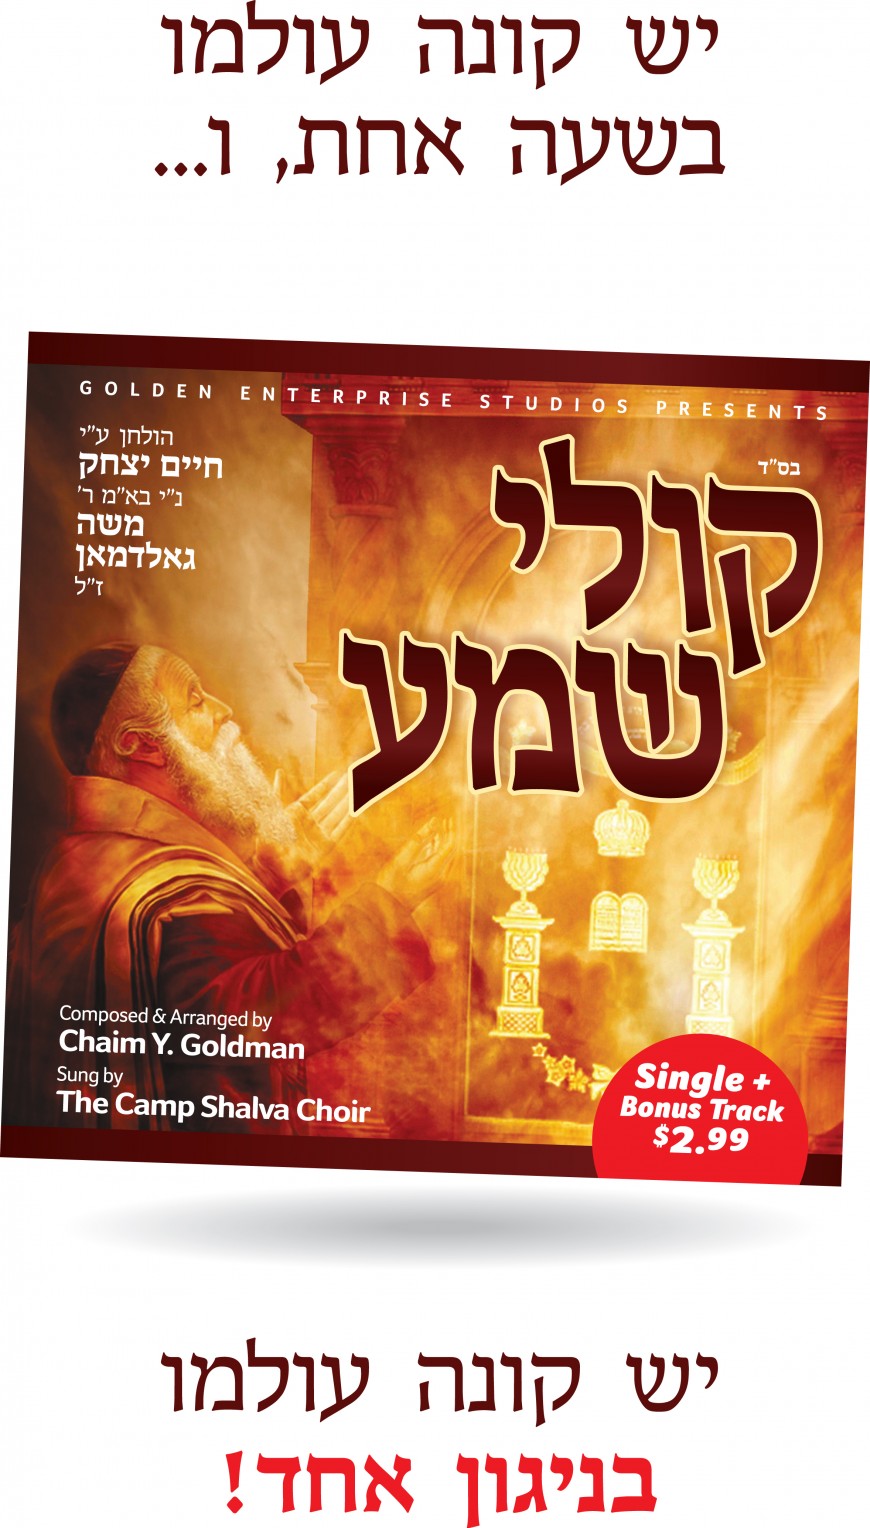 Chaim Y. Goldman Presents: “Koili Shima” featuring the Camp Shalva Choir